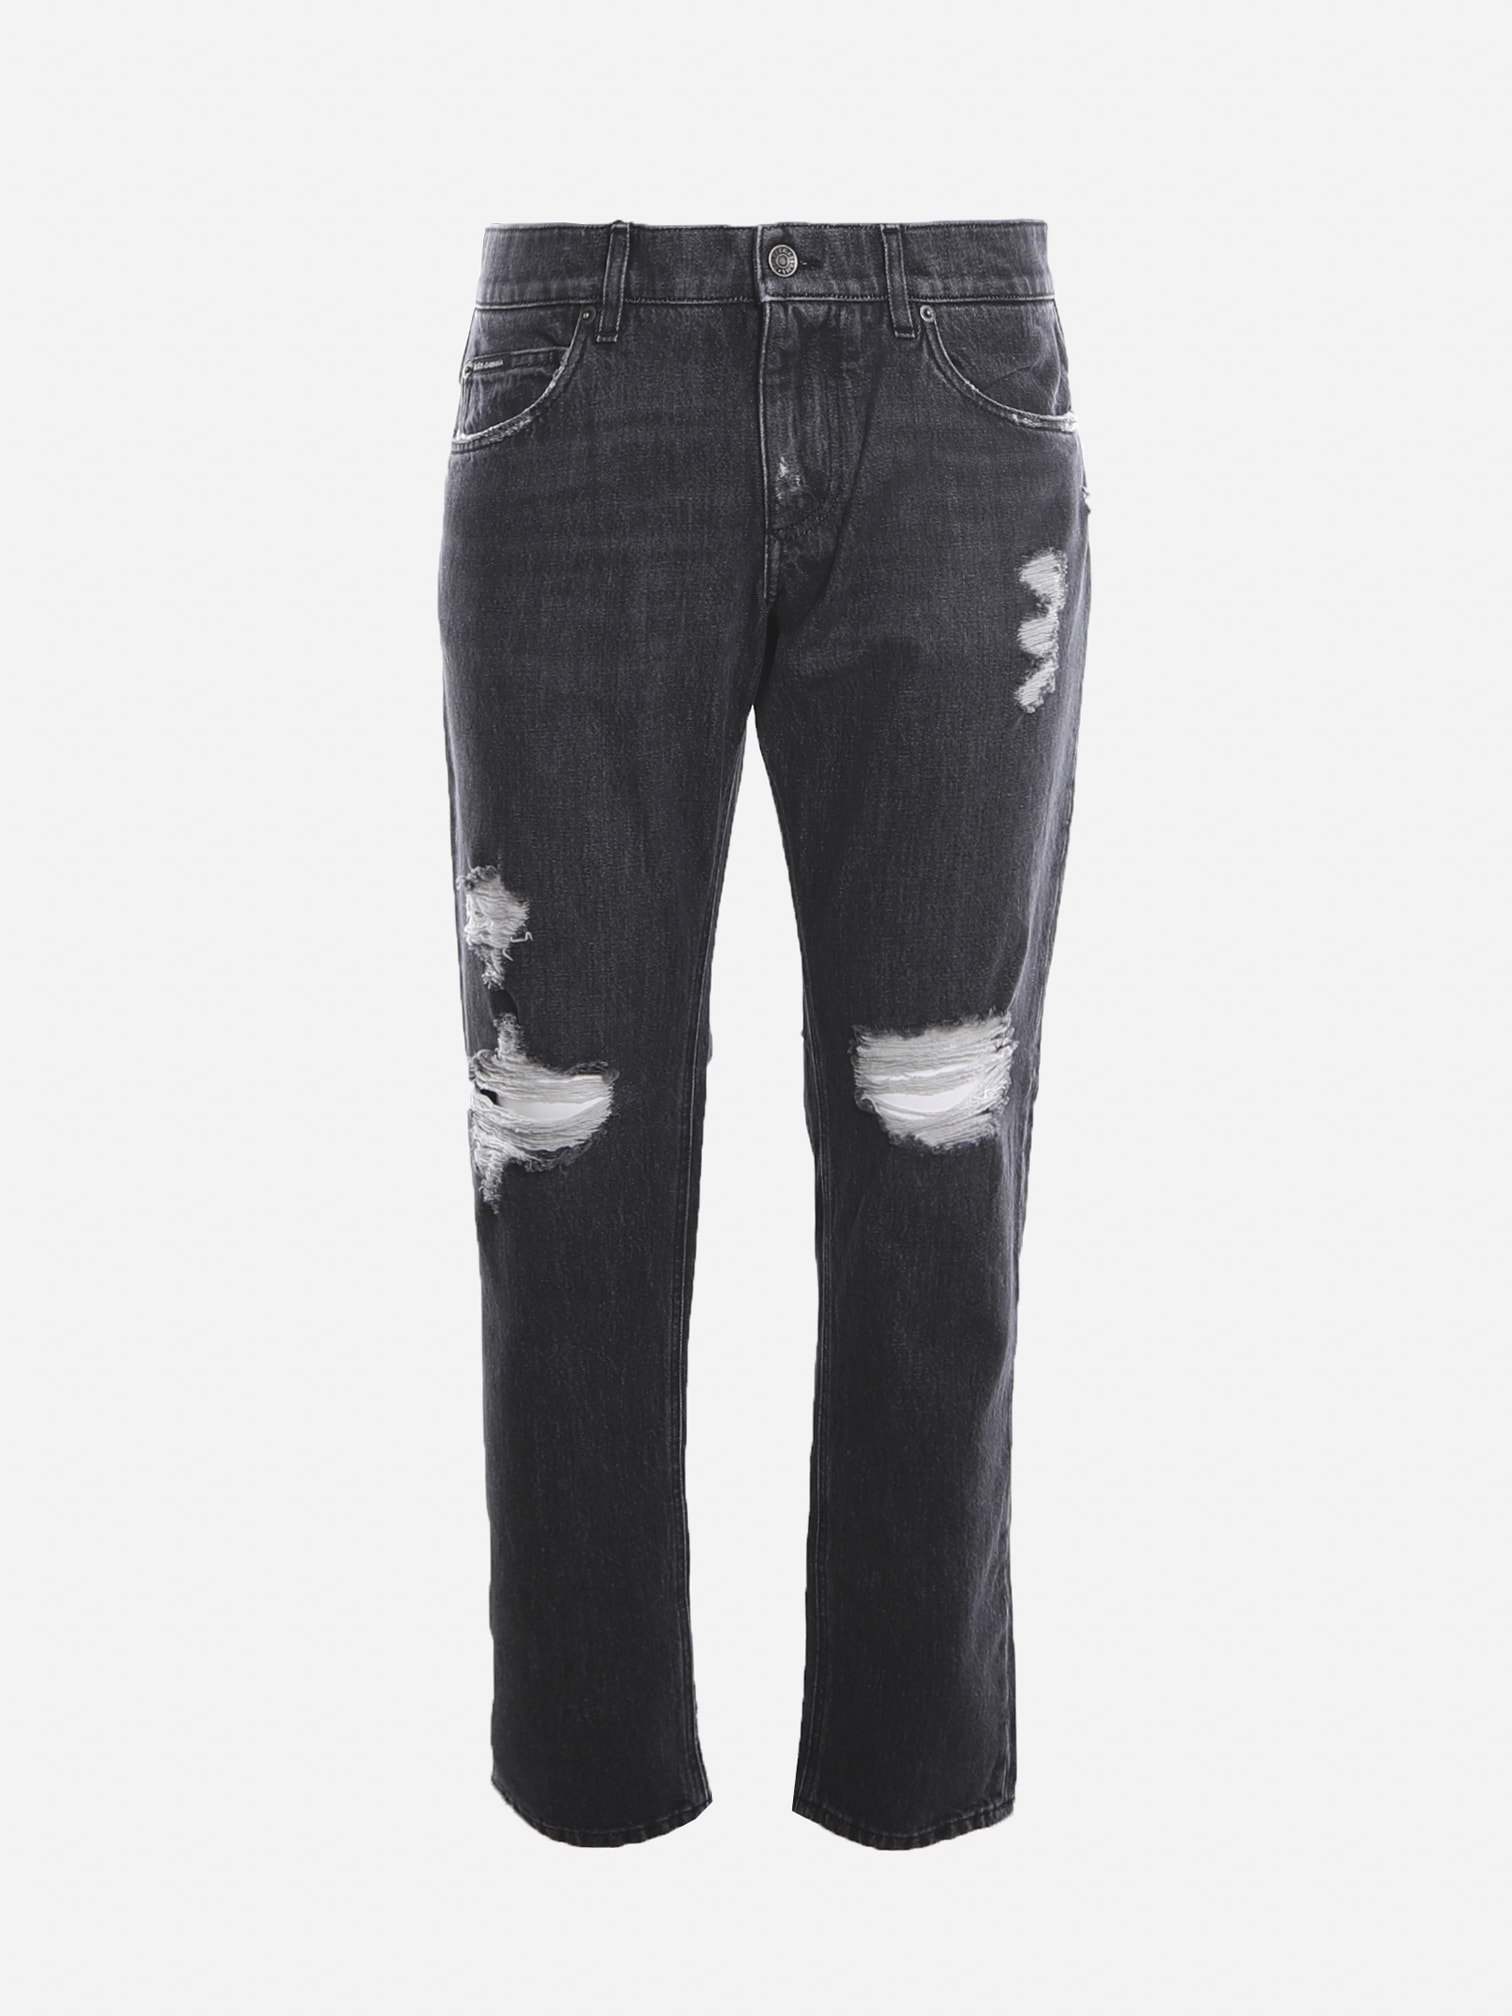 Dolce & Gabbana Distressed Cotton Denim Jeans